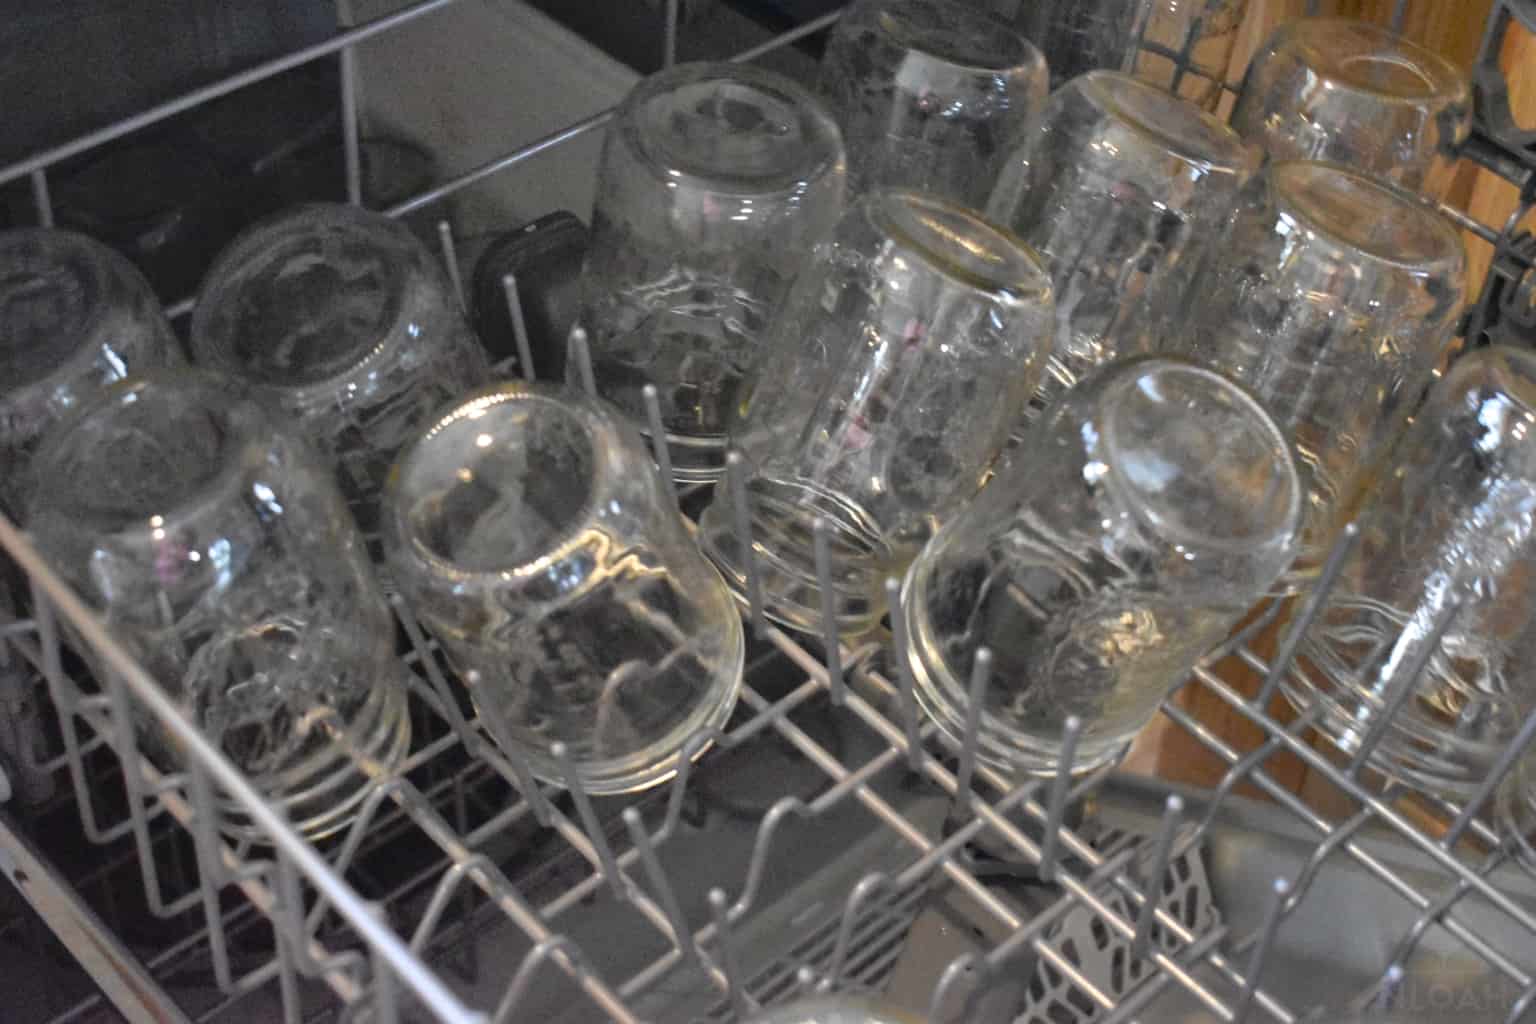 sanitizing canning jars in dishwasher